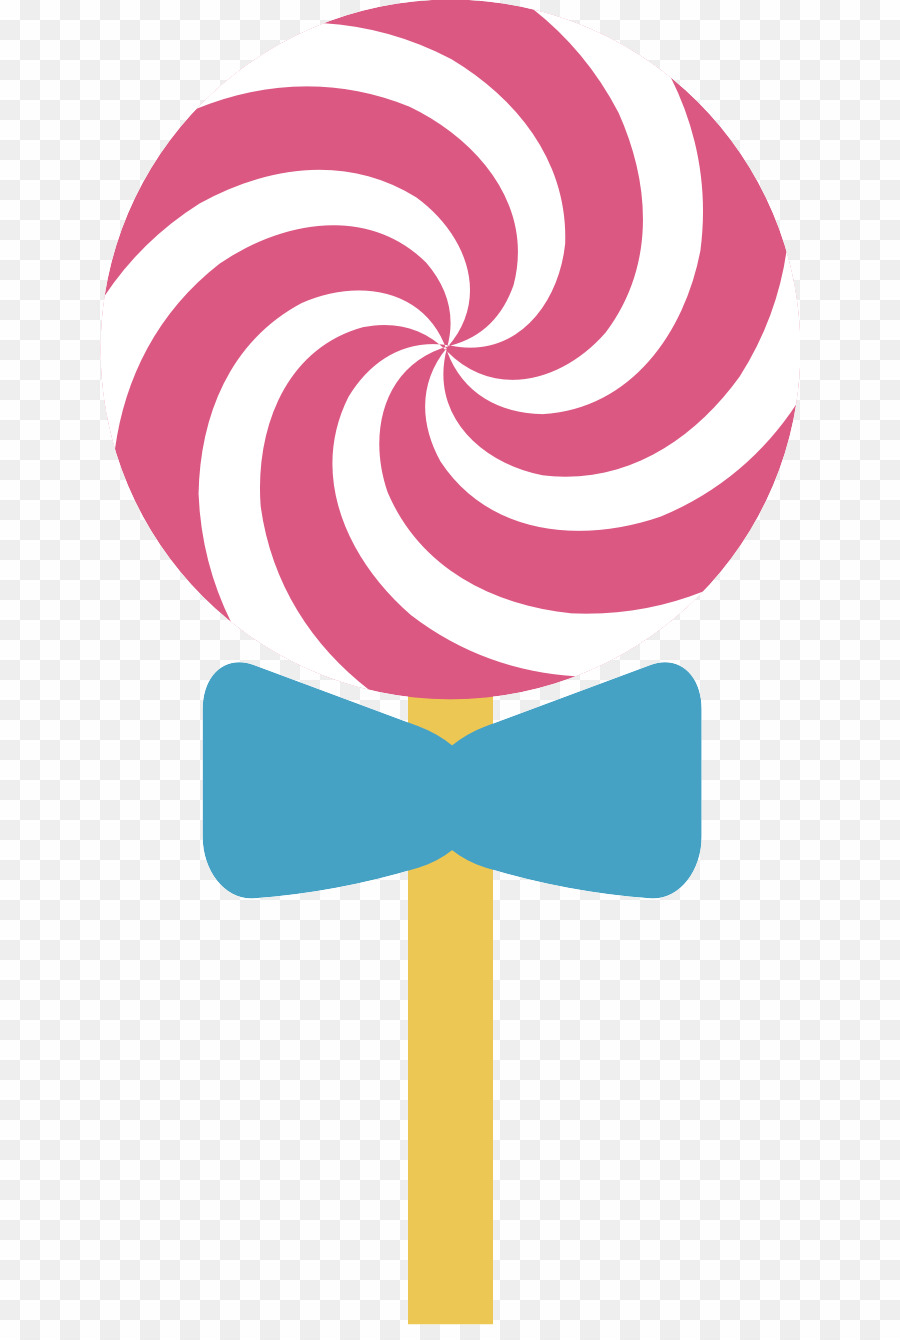 Candyland PNG Candy Land Lollipop Clipart download